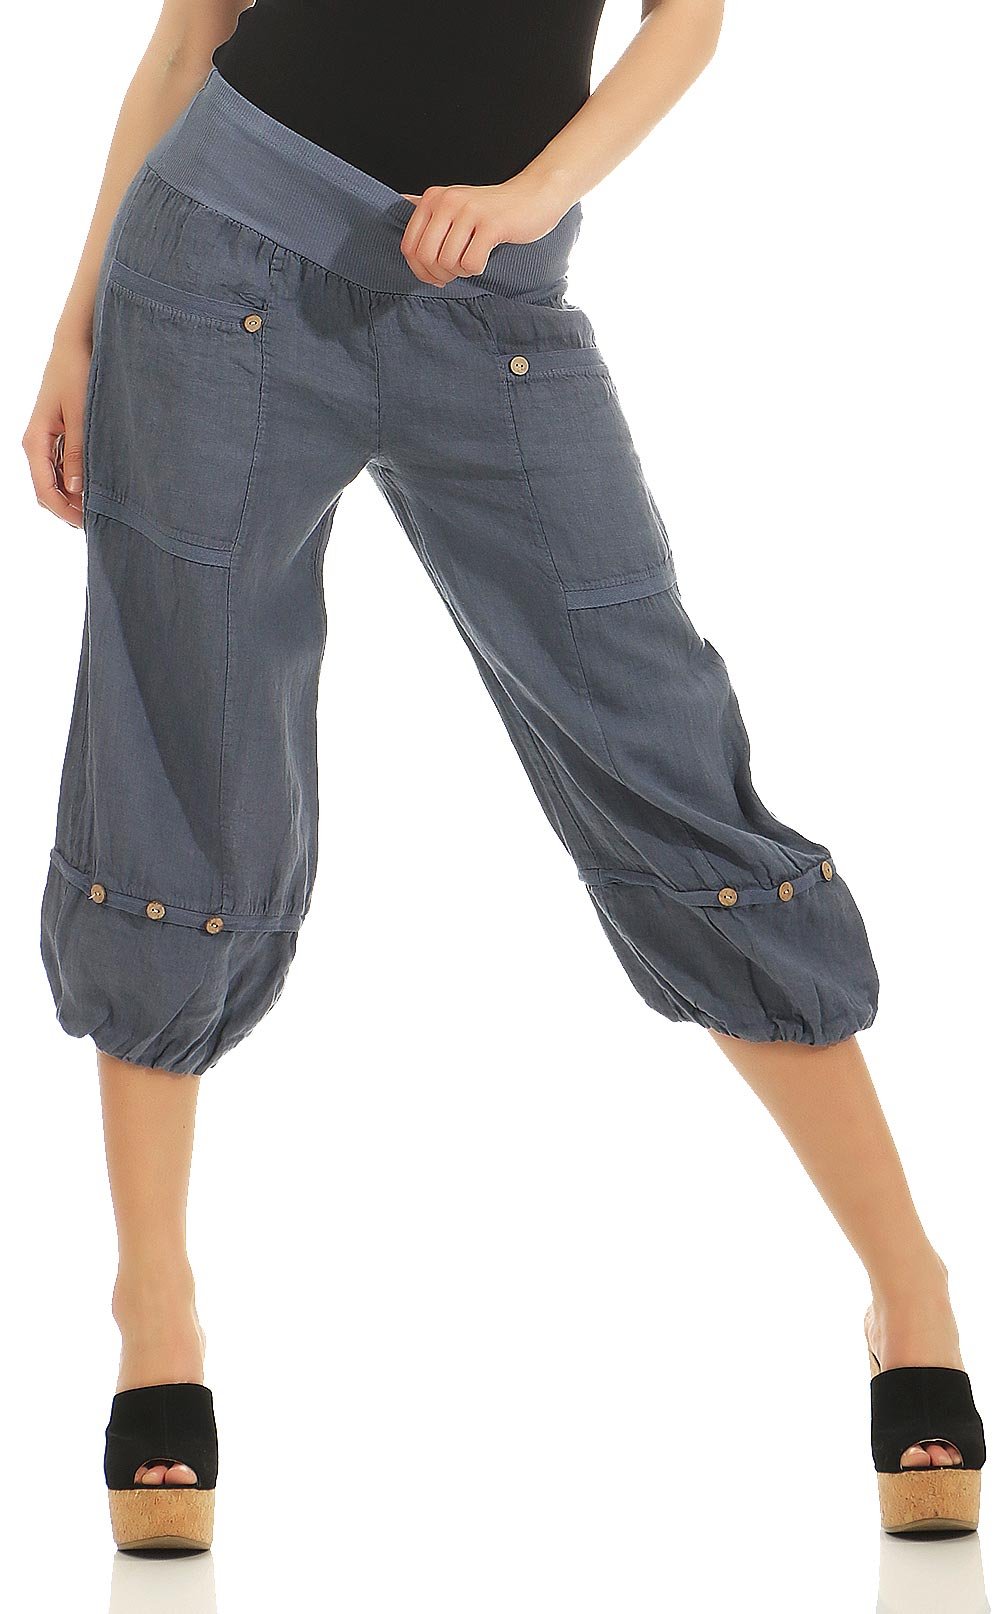 Malito Damen Hose aus Leinen | Stoffhose in Uni Farben | Freizeithose für den Strand | Chino - Capri Hose 1575 (Jeansblau, XL)